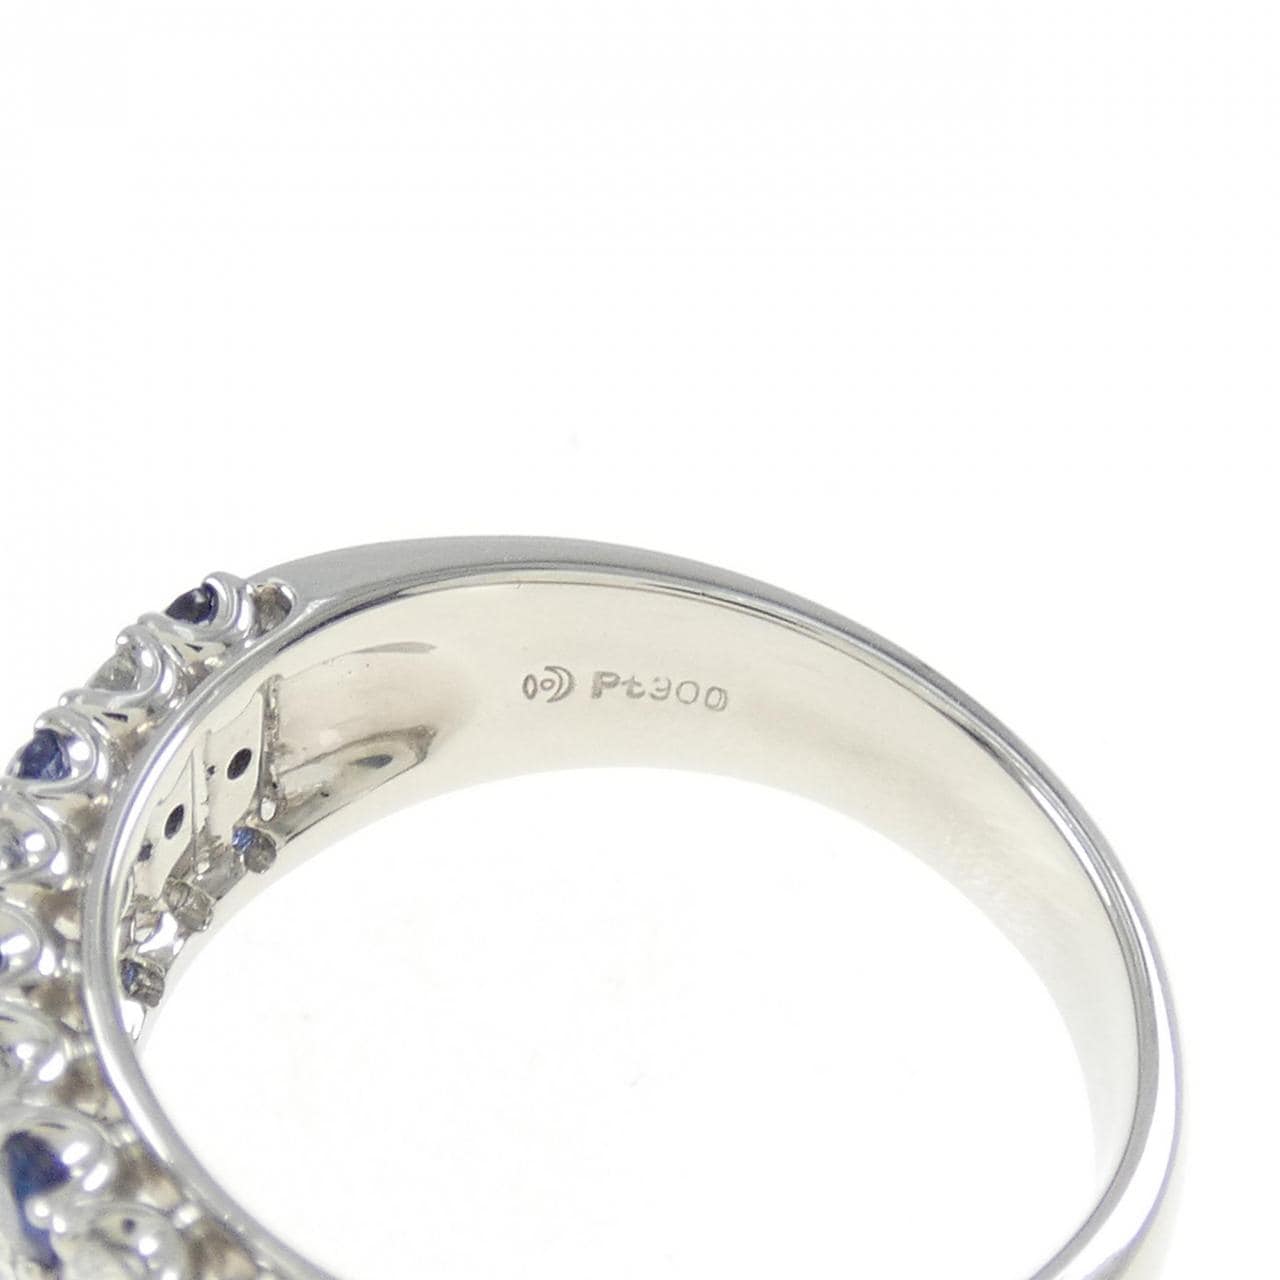 Tasaki sapphire ring